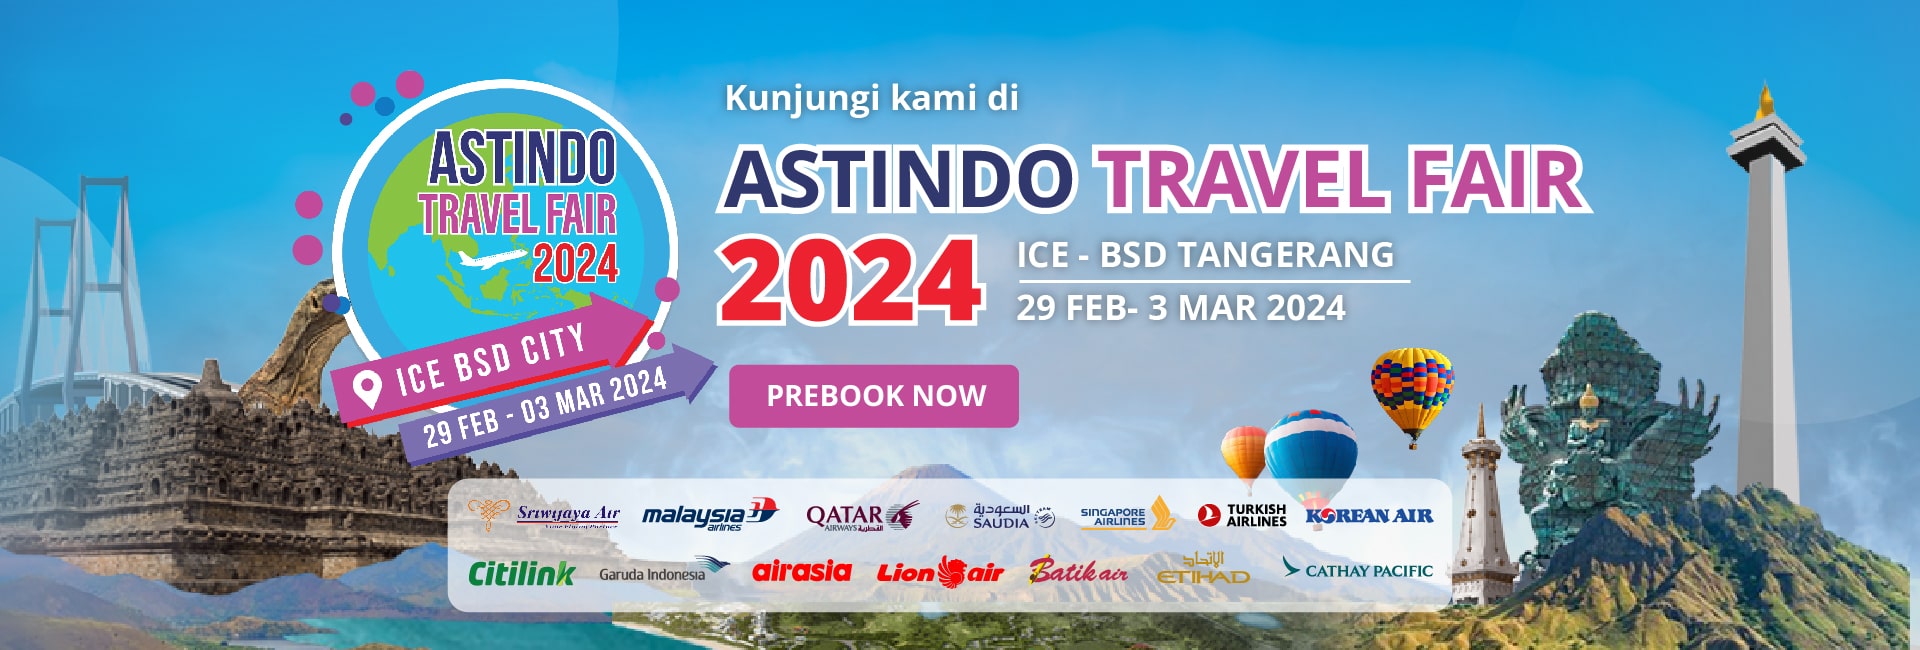 ASTINDO TRAVEL FAIR 2024 - Flight Pre Order